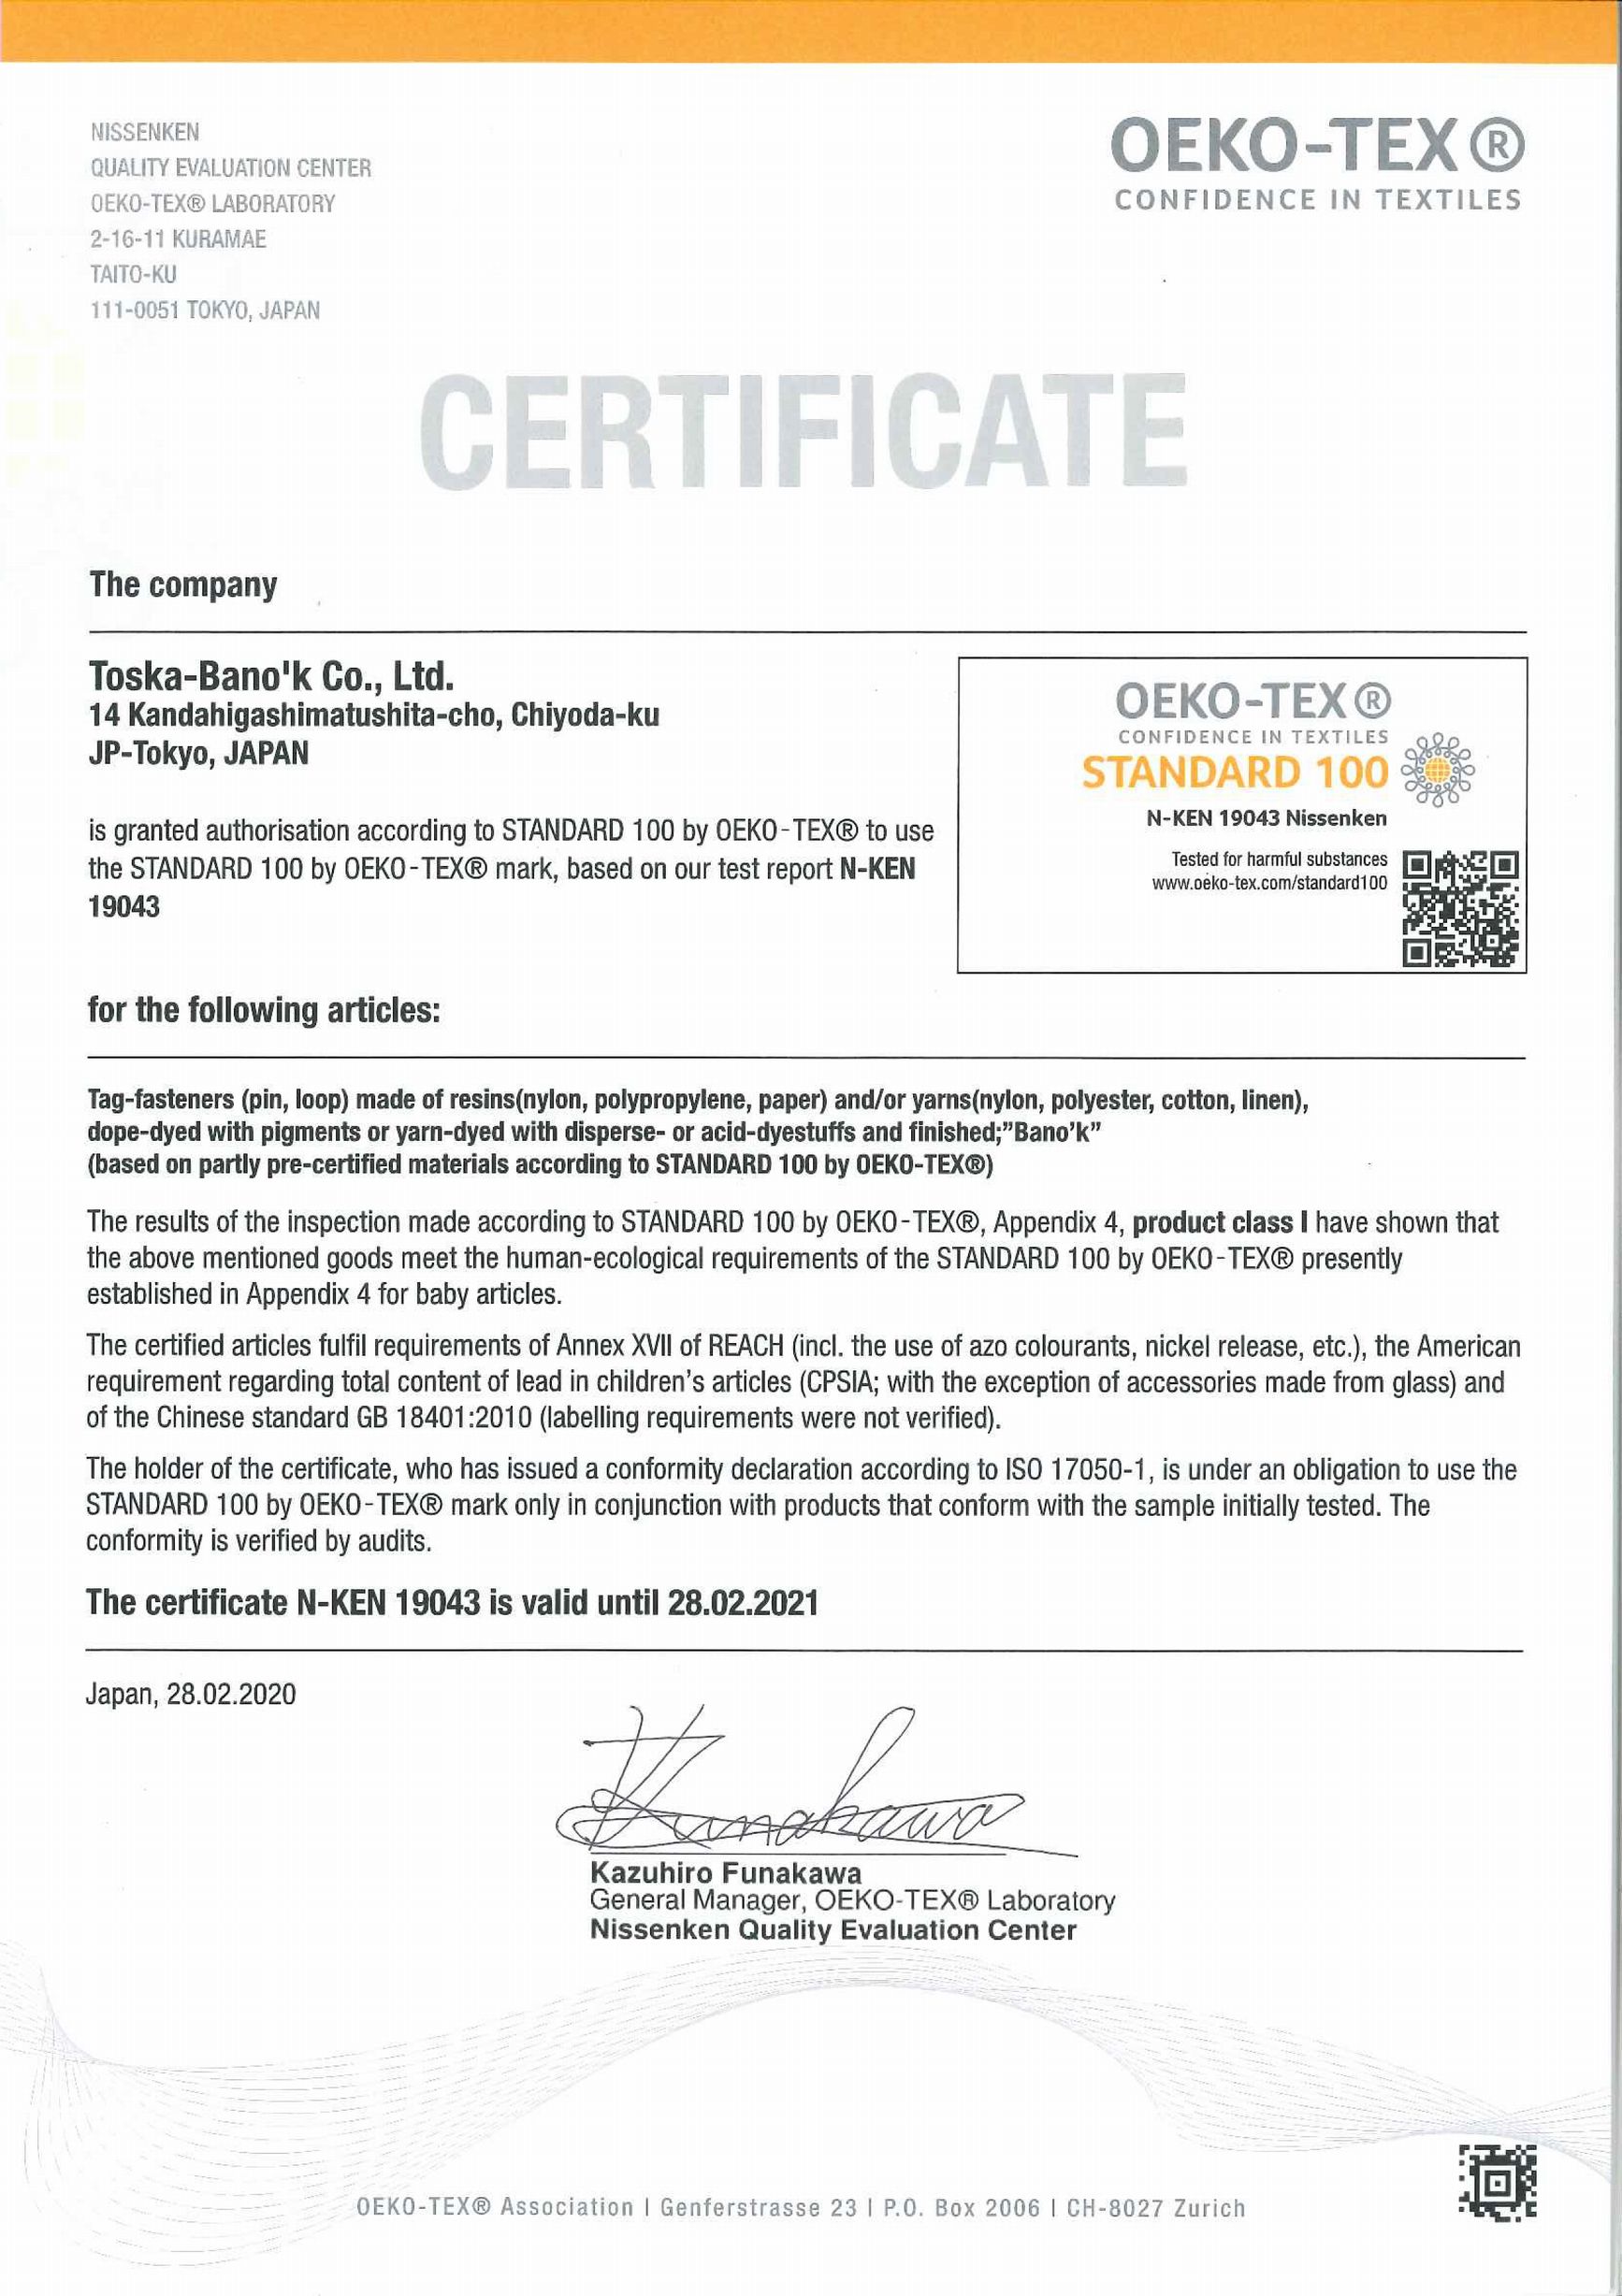 Asia Pacific Yarn (APY) Awarded OEKO-TEX® Standard 100 Certification